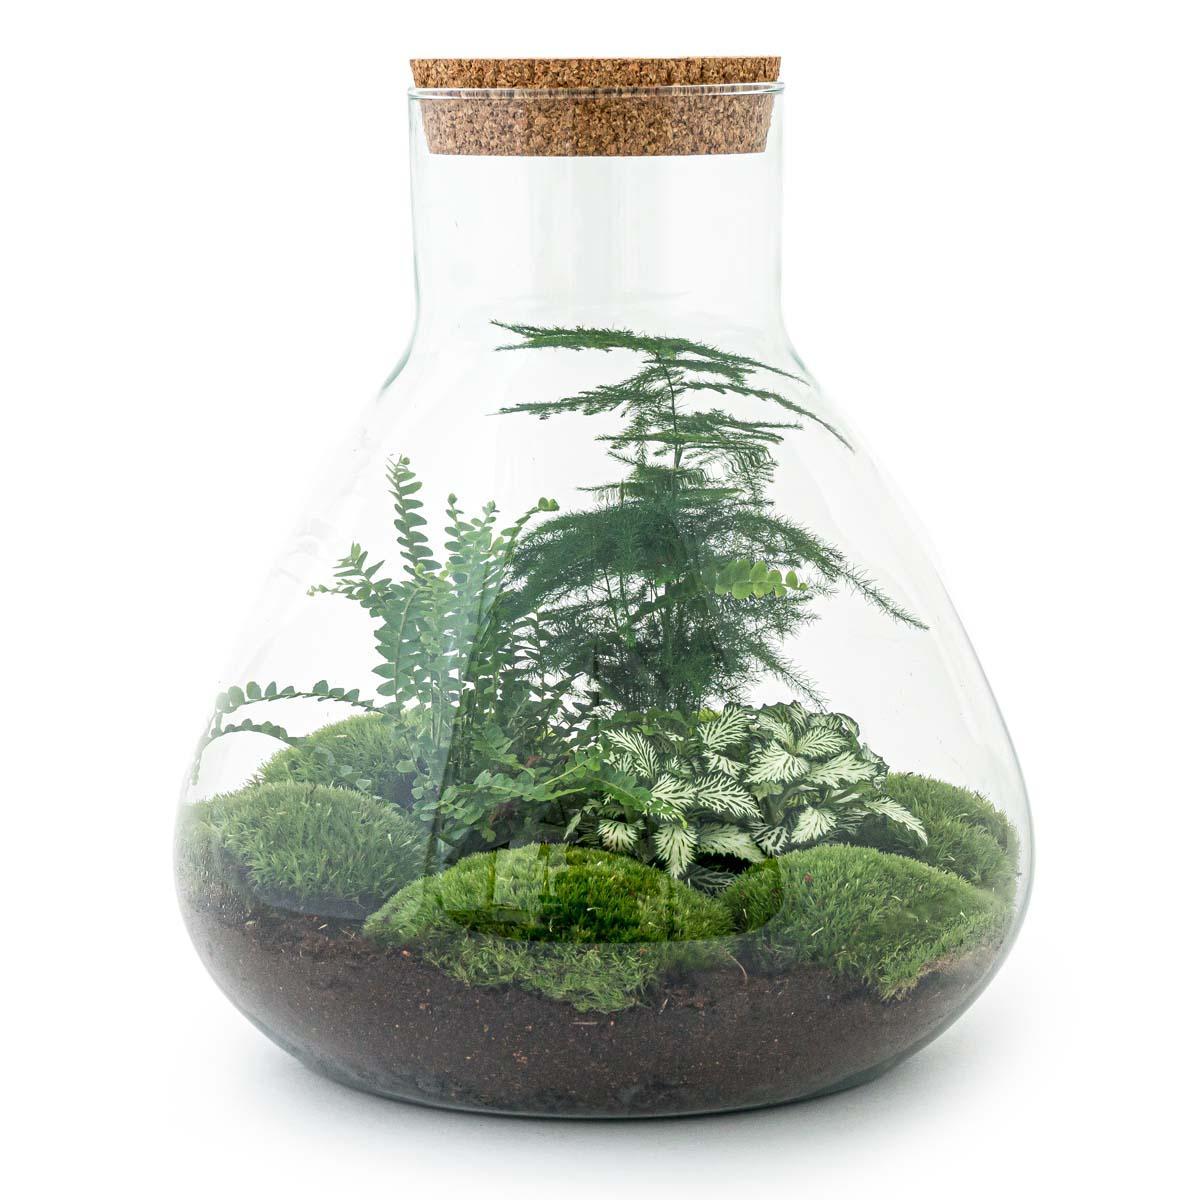 Livraison plante Kit Terrarium DIY 3 plantes - SAMOS